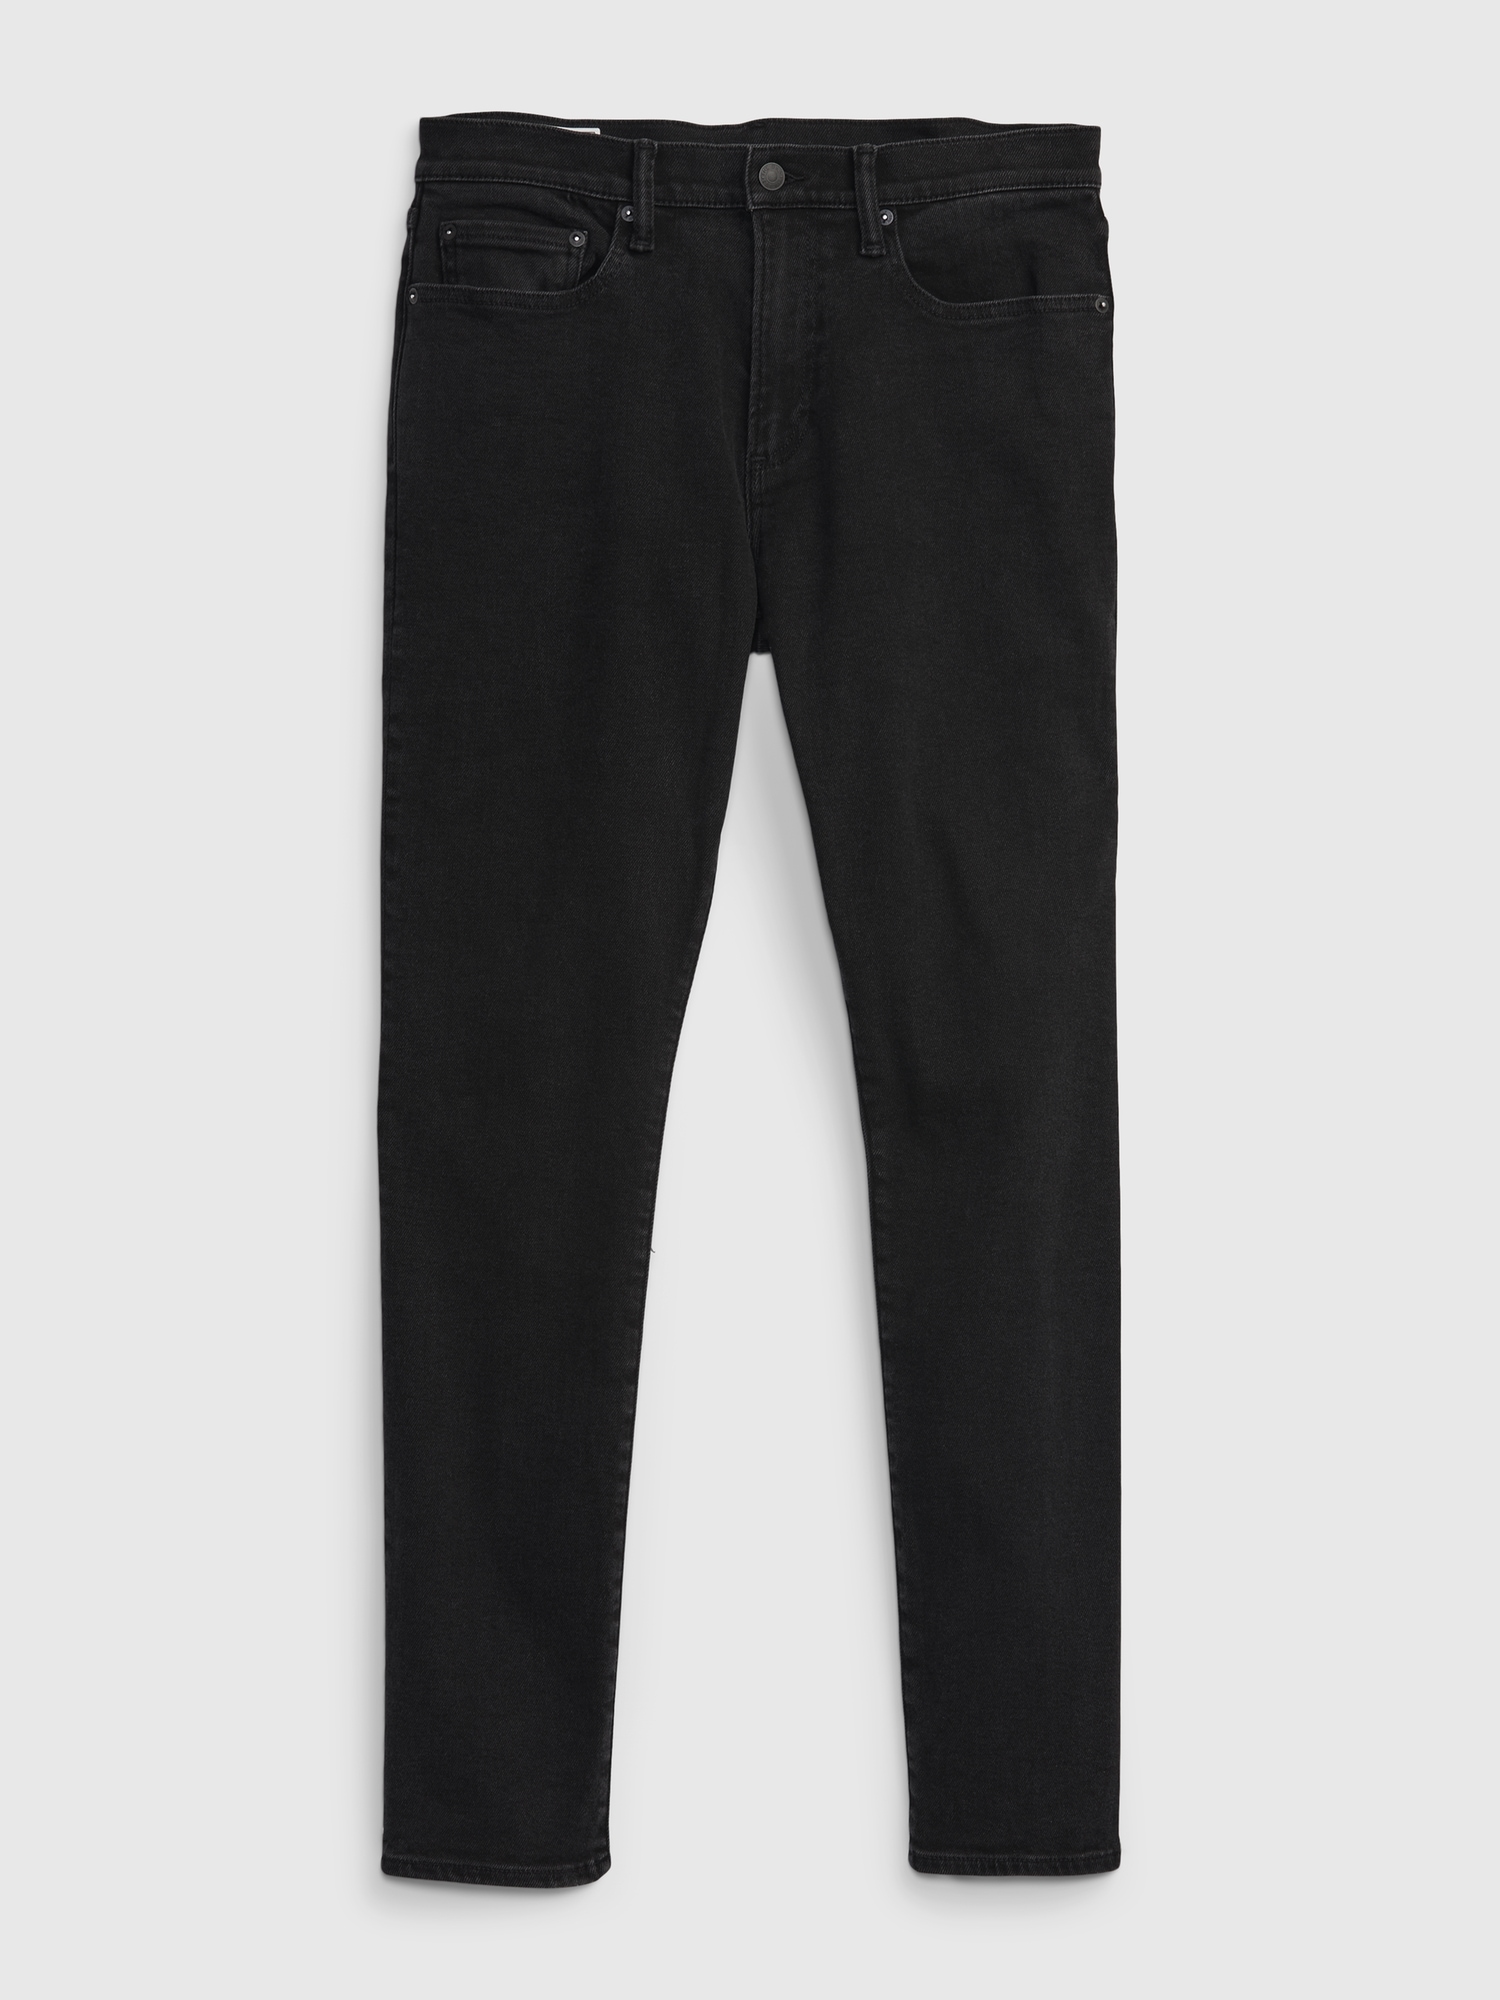 GAP Men's Soft Wear Stretch Slim Fit Denim Jeans